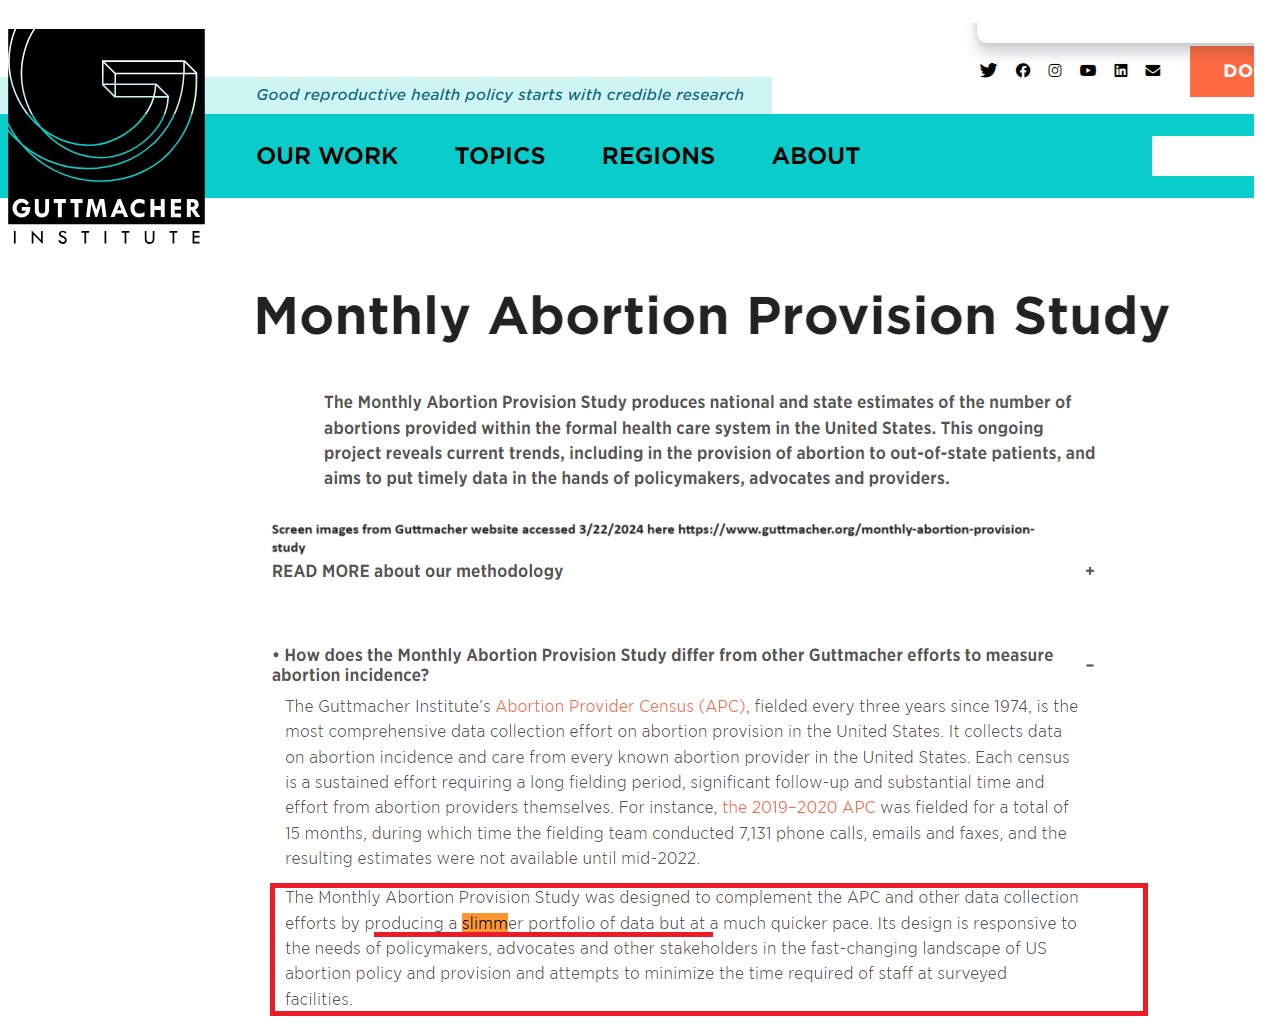 Monthly Abortion Reporting Guttmacher "Slimmer portfolio" methodology